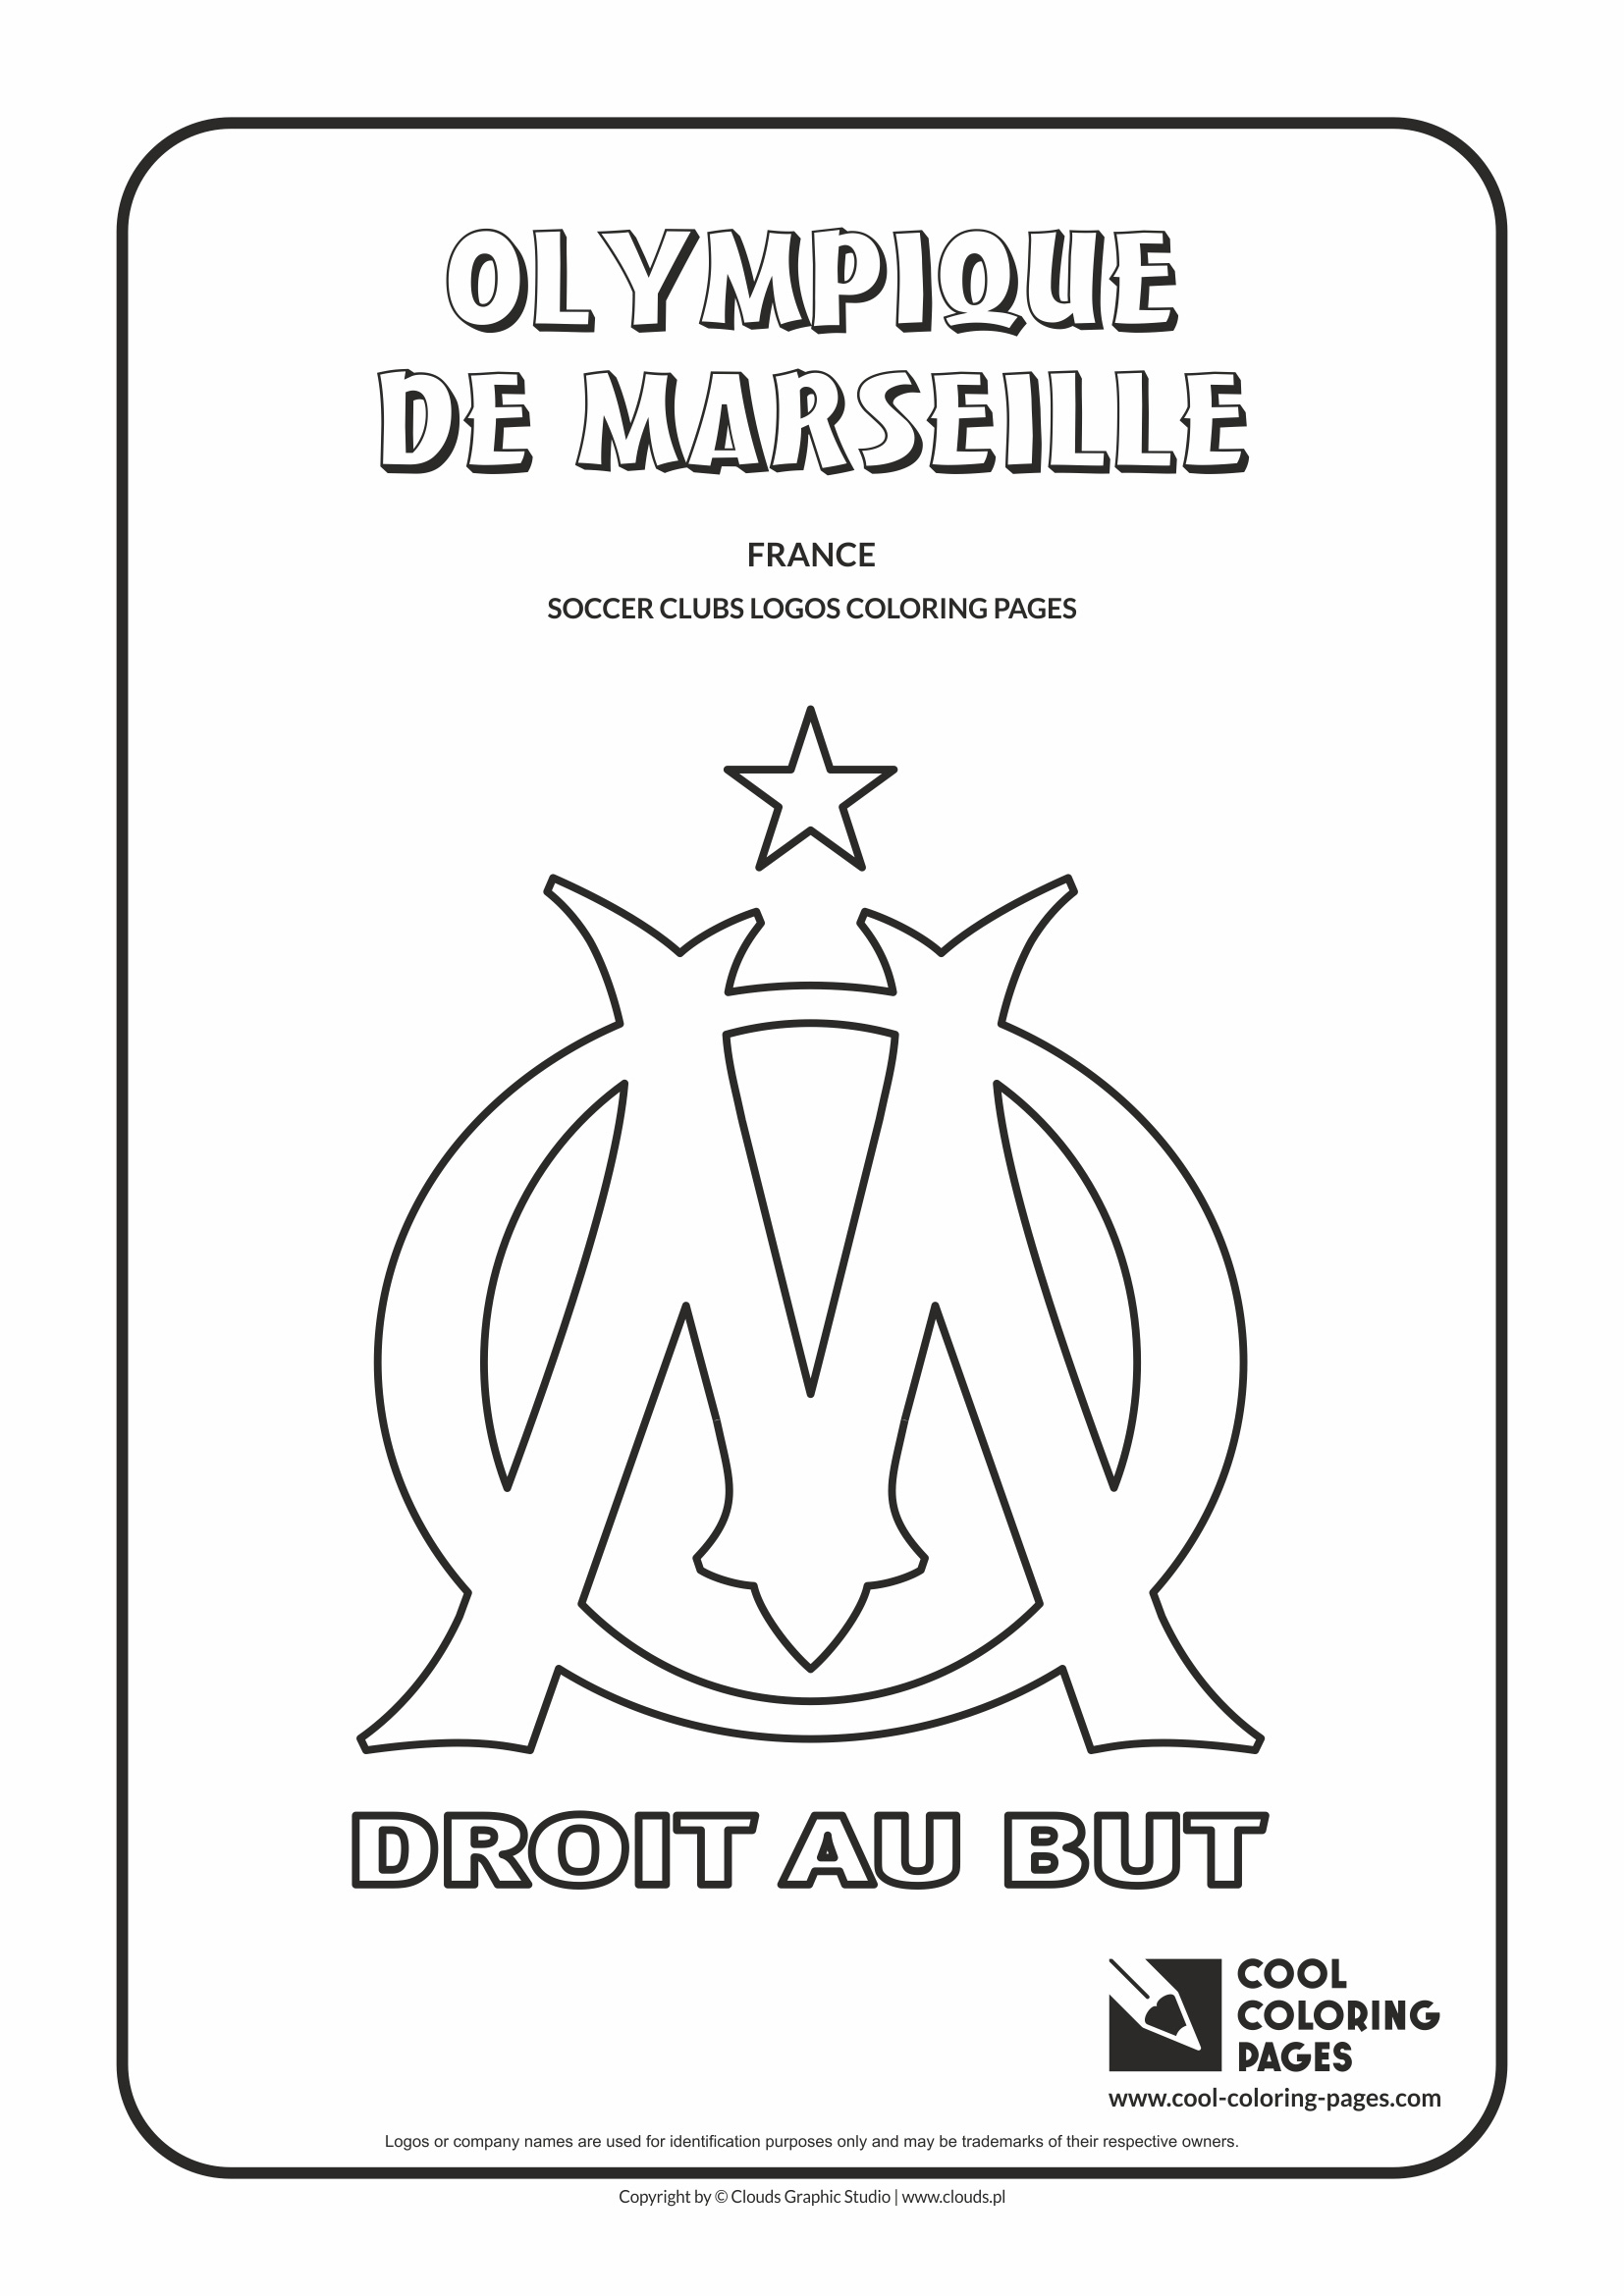 Olympique de Marseille logo coloring / Coloring page with Olympique Marsylia | Cool Coloring Pages